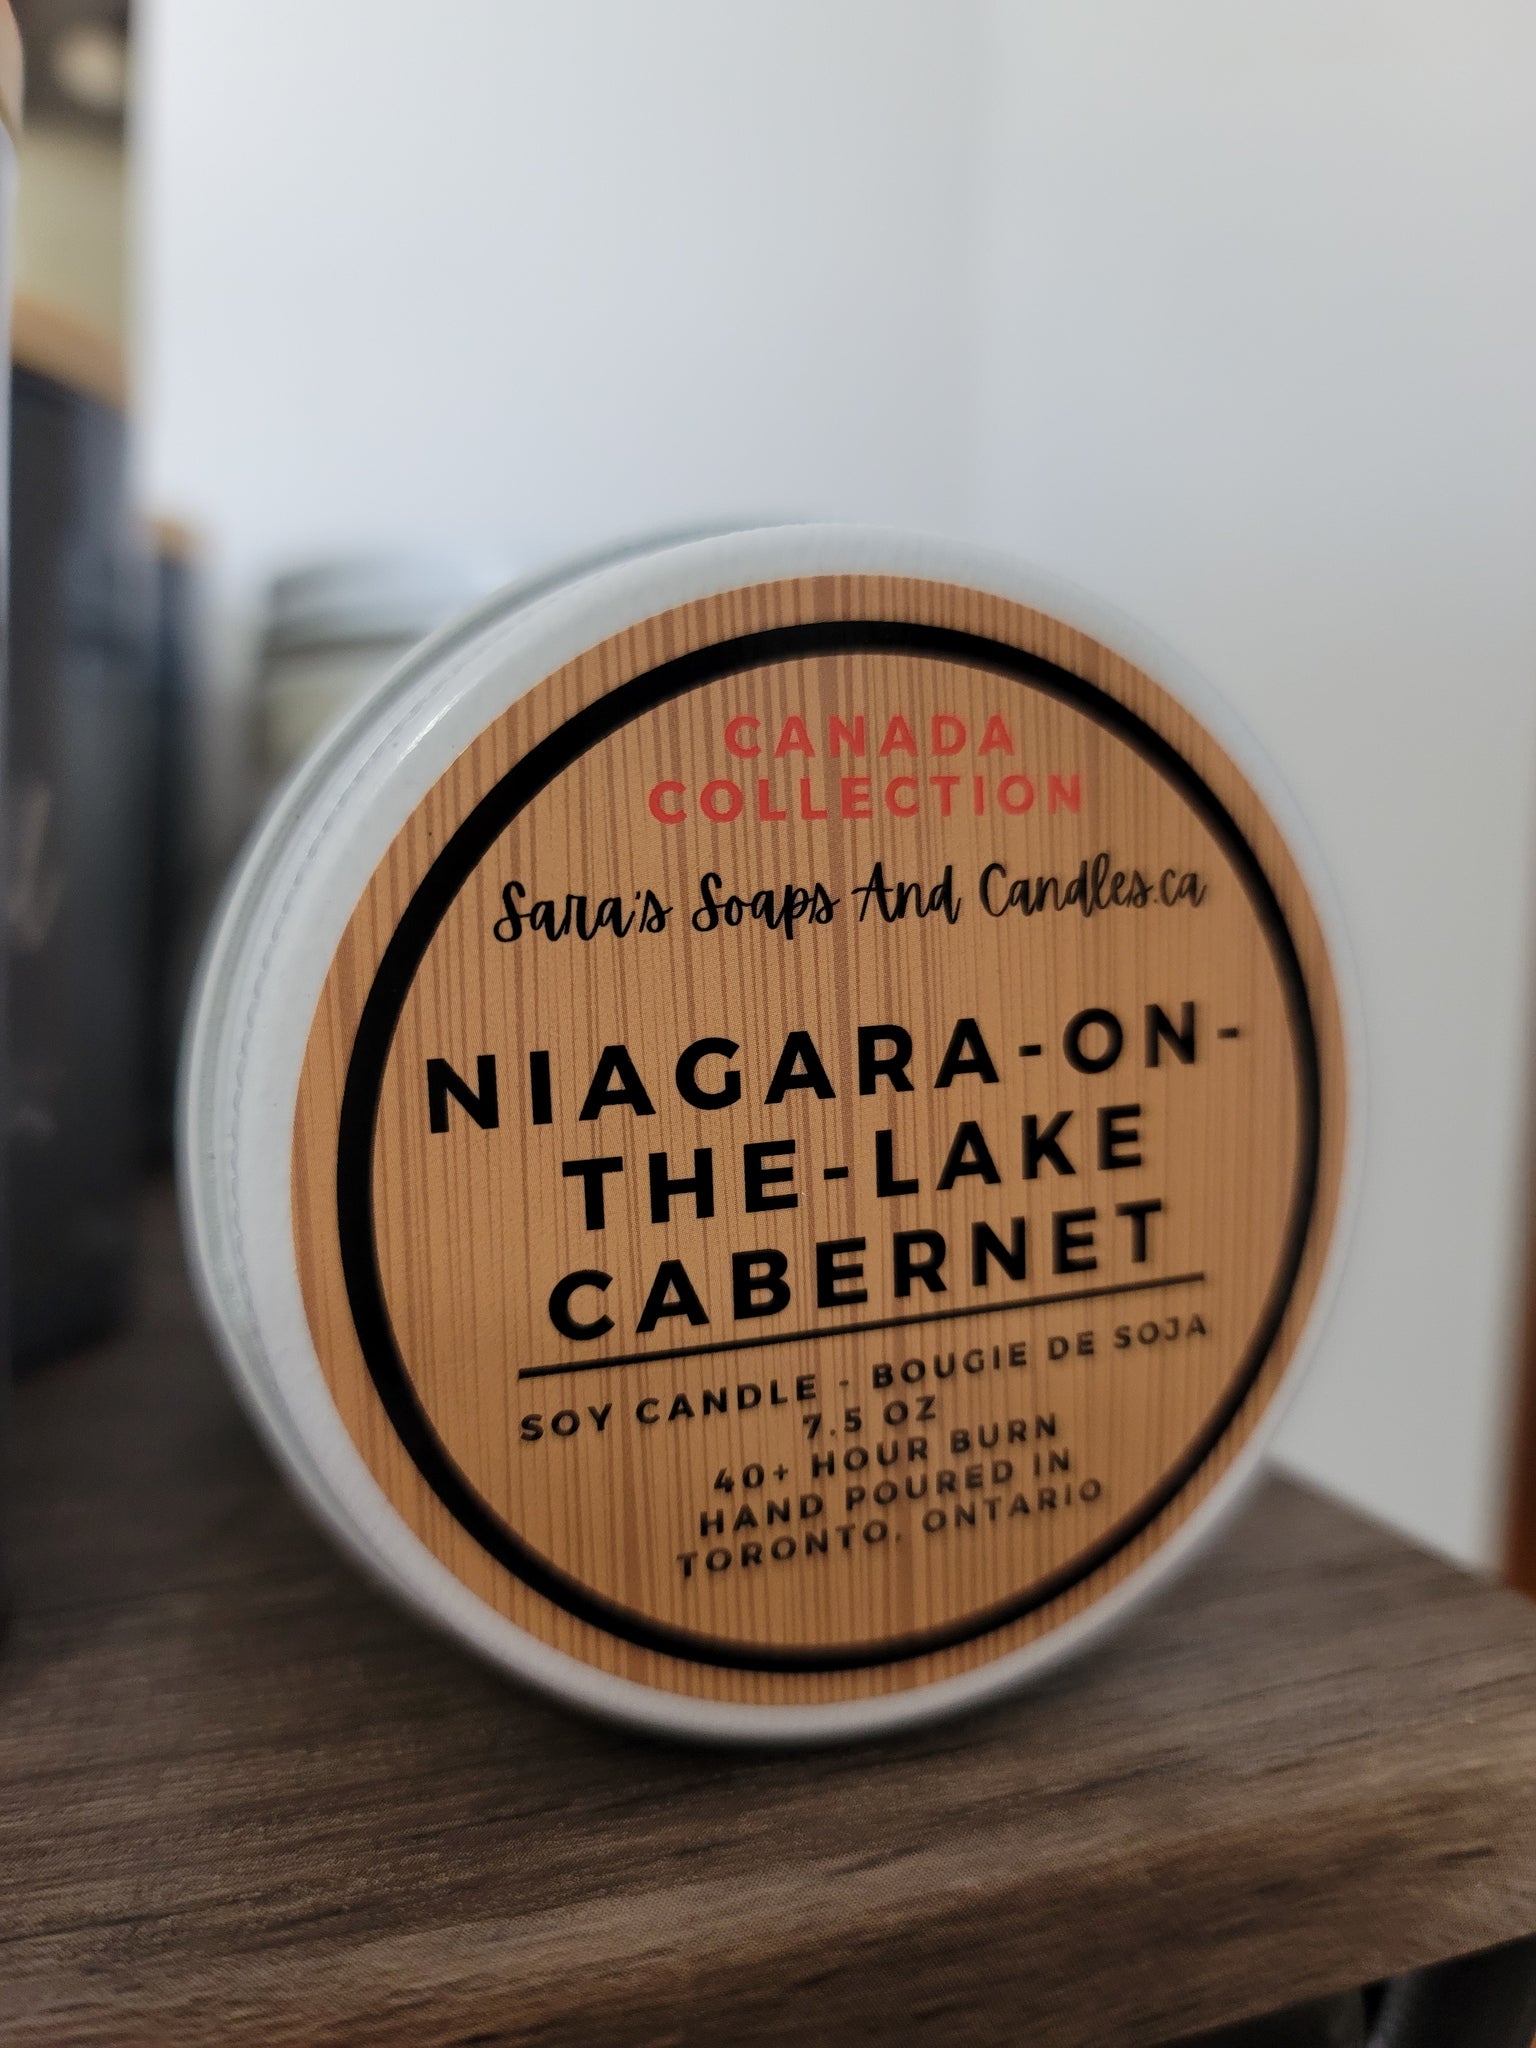 Niagara-on-the-lake-cabernet